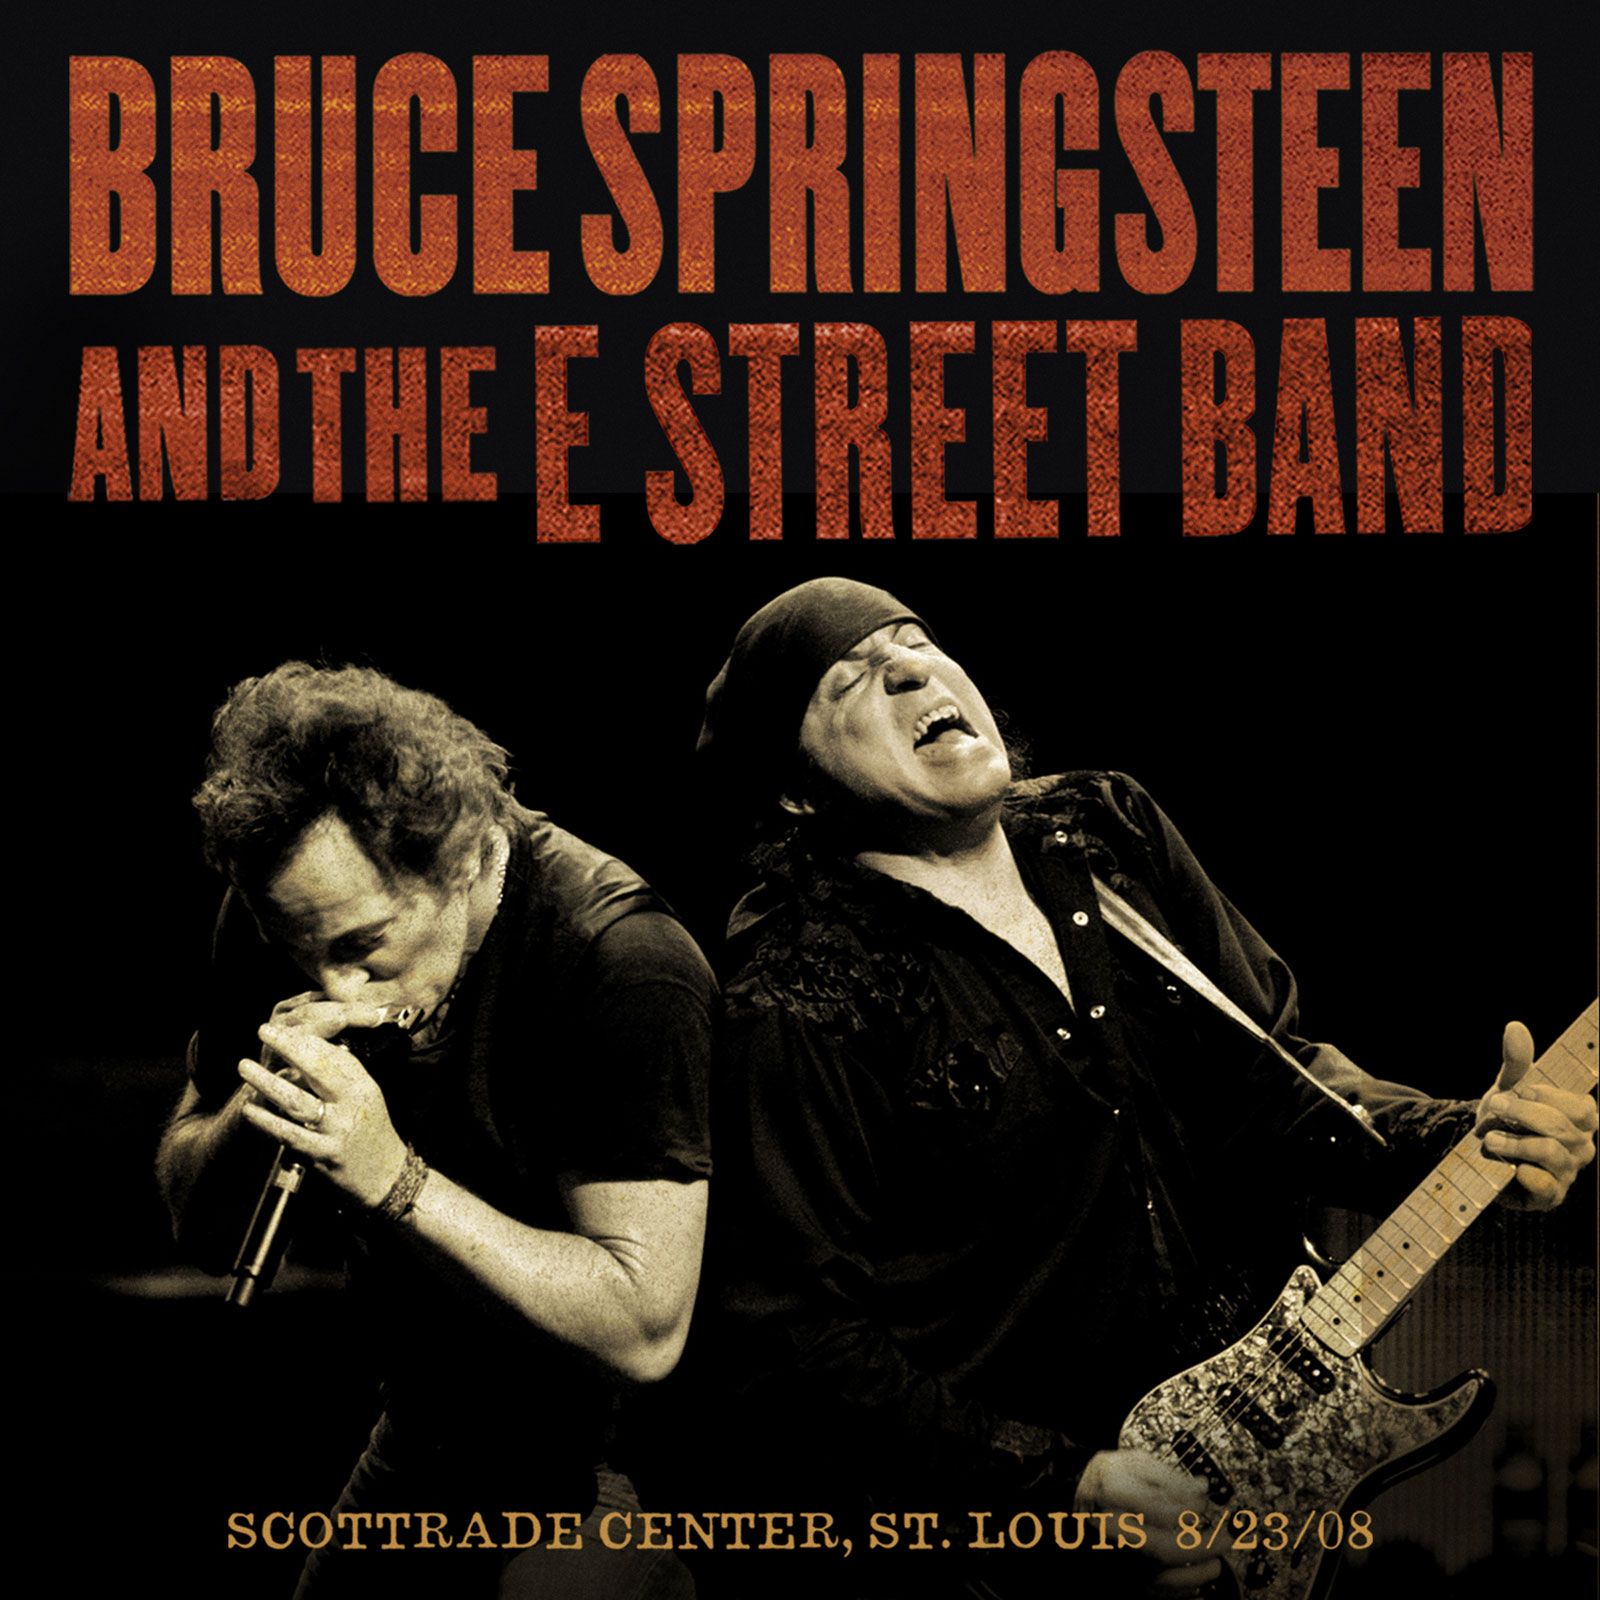 Bruce Springsteen - Magic Tour - St. Louis, Scottrade Center